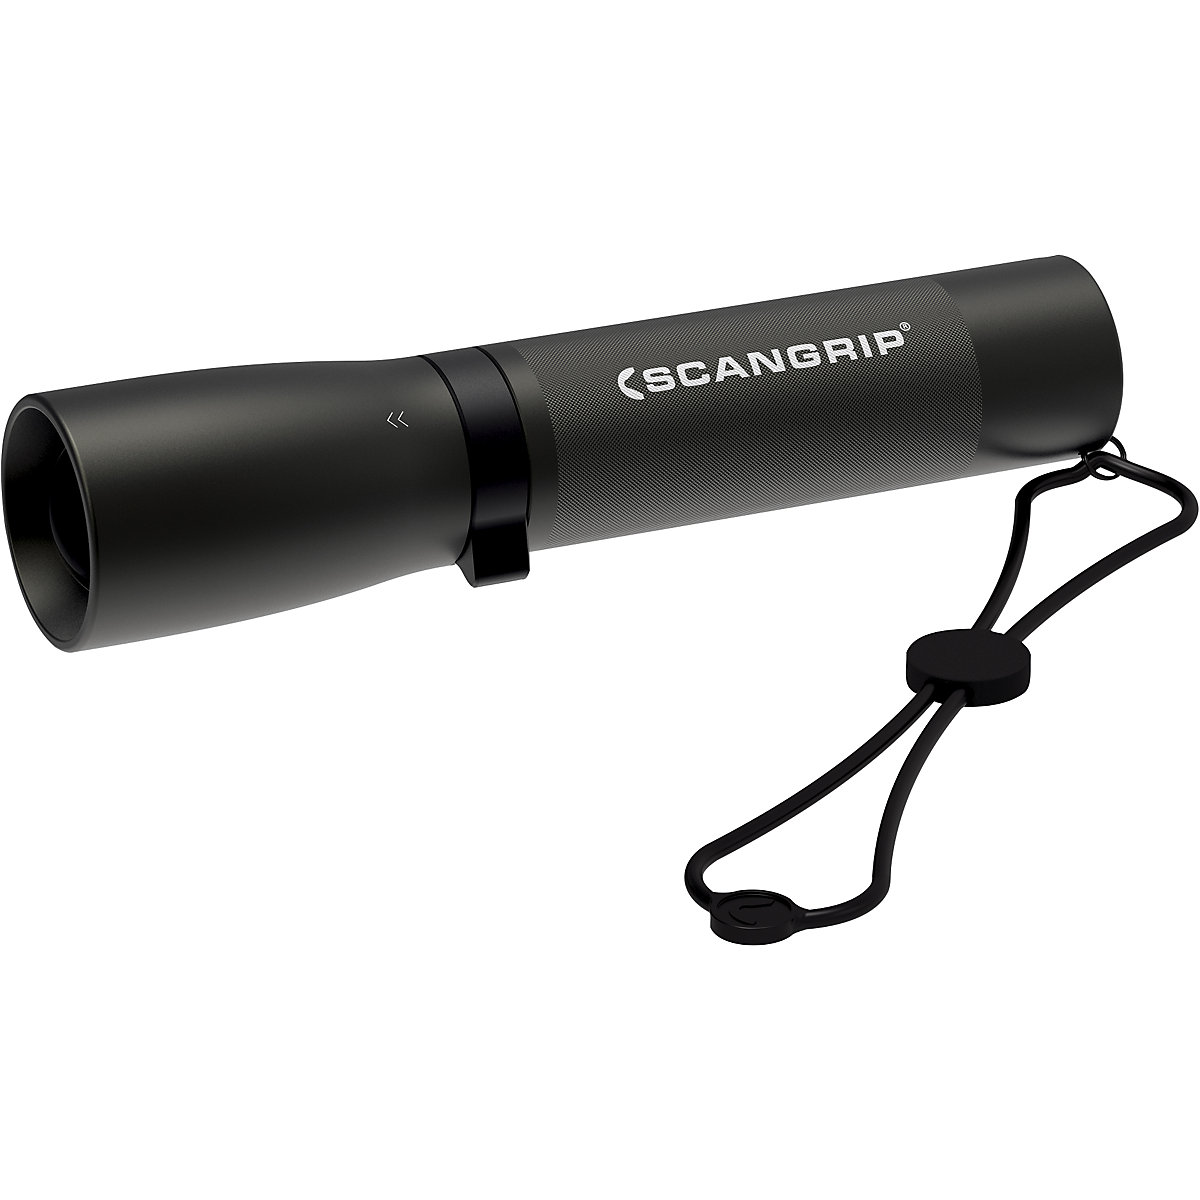 FLASH 1000 R rechargeable flashlight - SCANGRIP